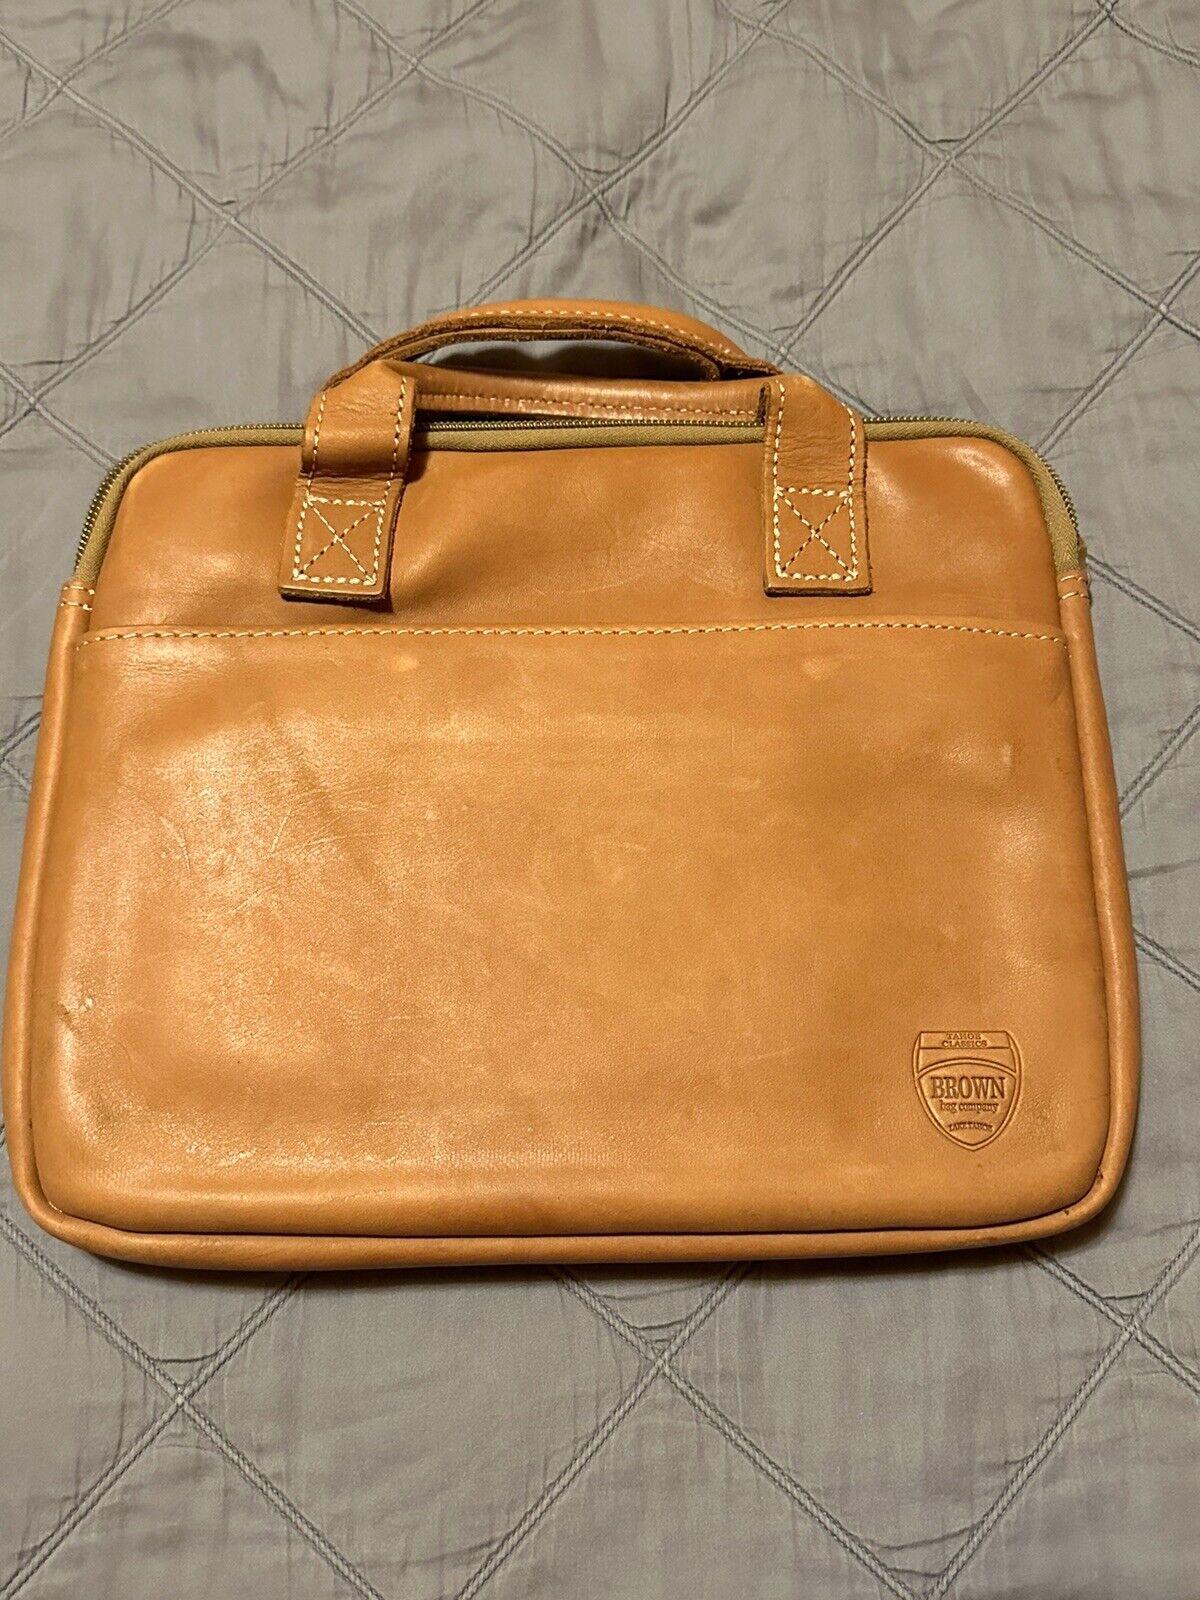 Brown Bag Company Tahoe Classic Tan Leather Laptop Bag 13”